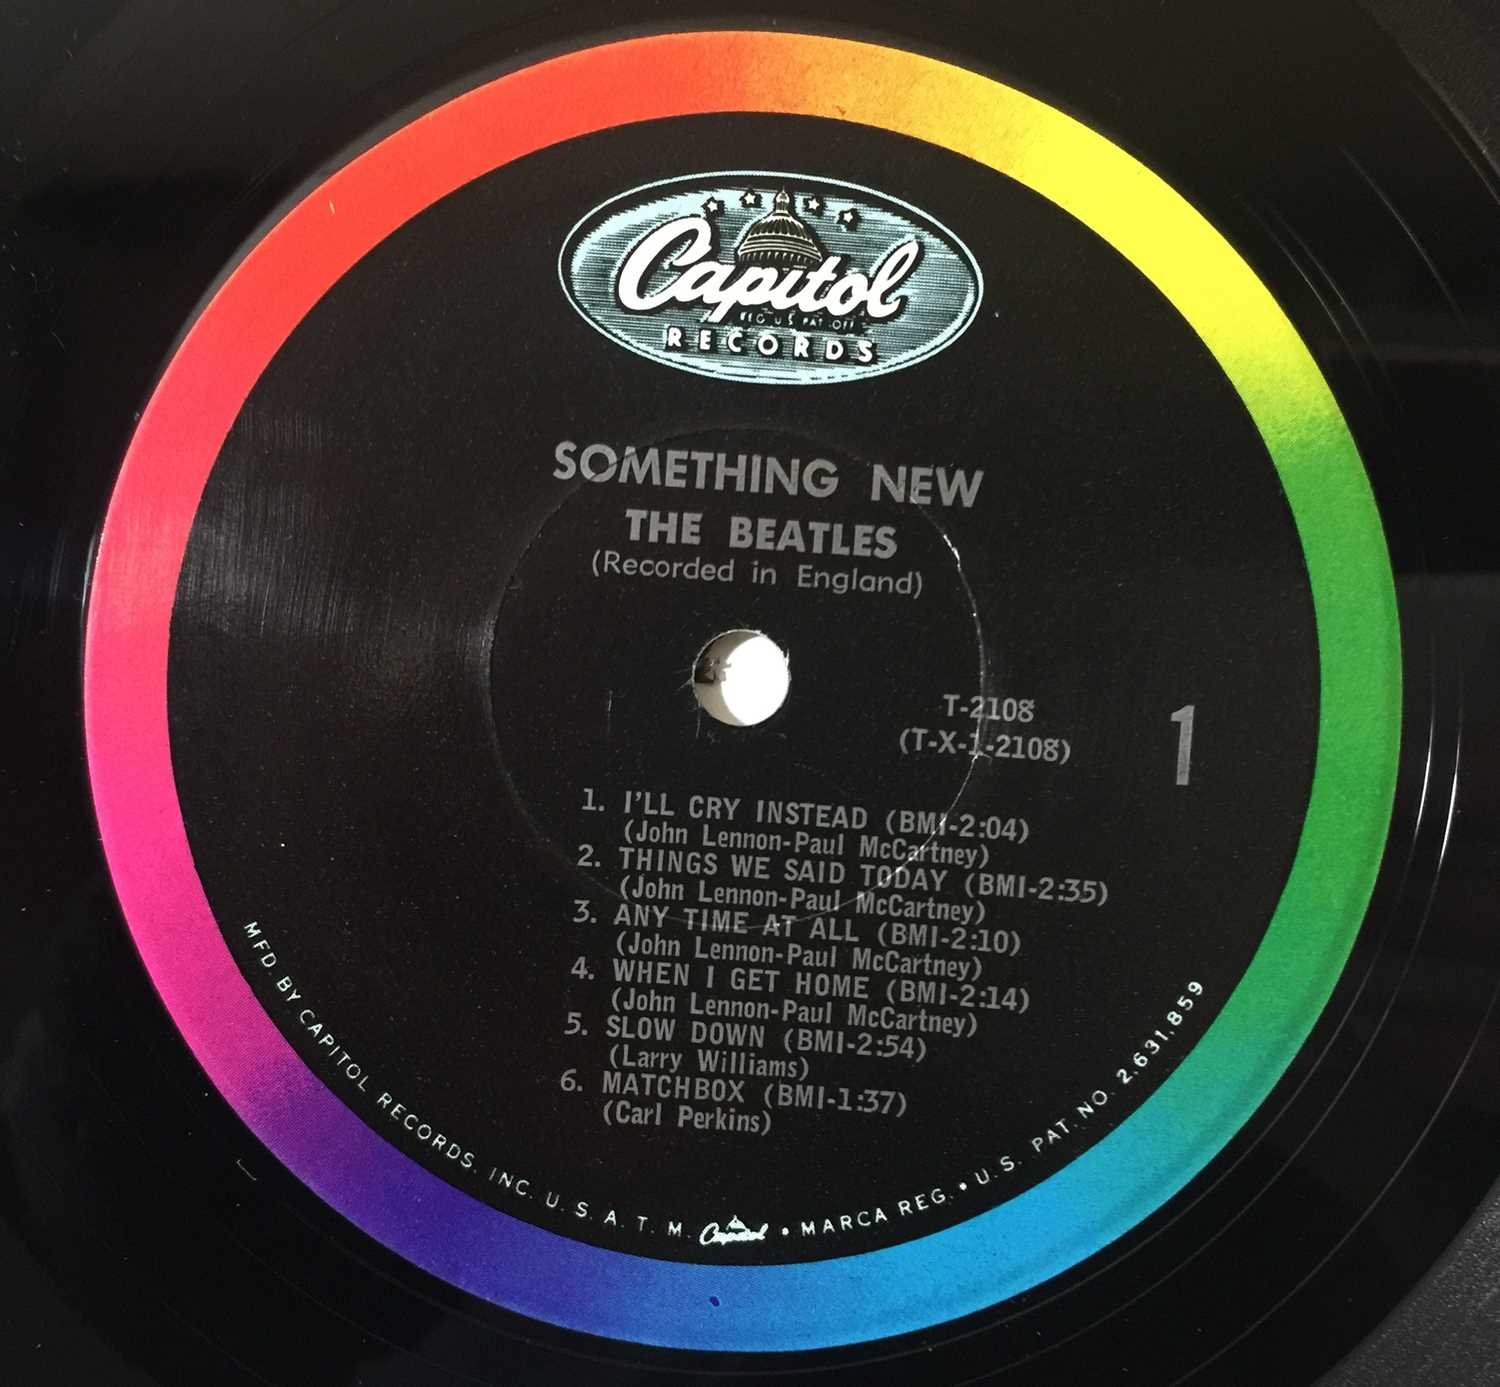 THE BEATLES - SOMETHING NEW LP (ORIGINAL US MONO PRESSING - CAPITOL T 2108 - SUPERB COPY) - Image 3 of 4